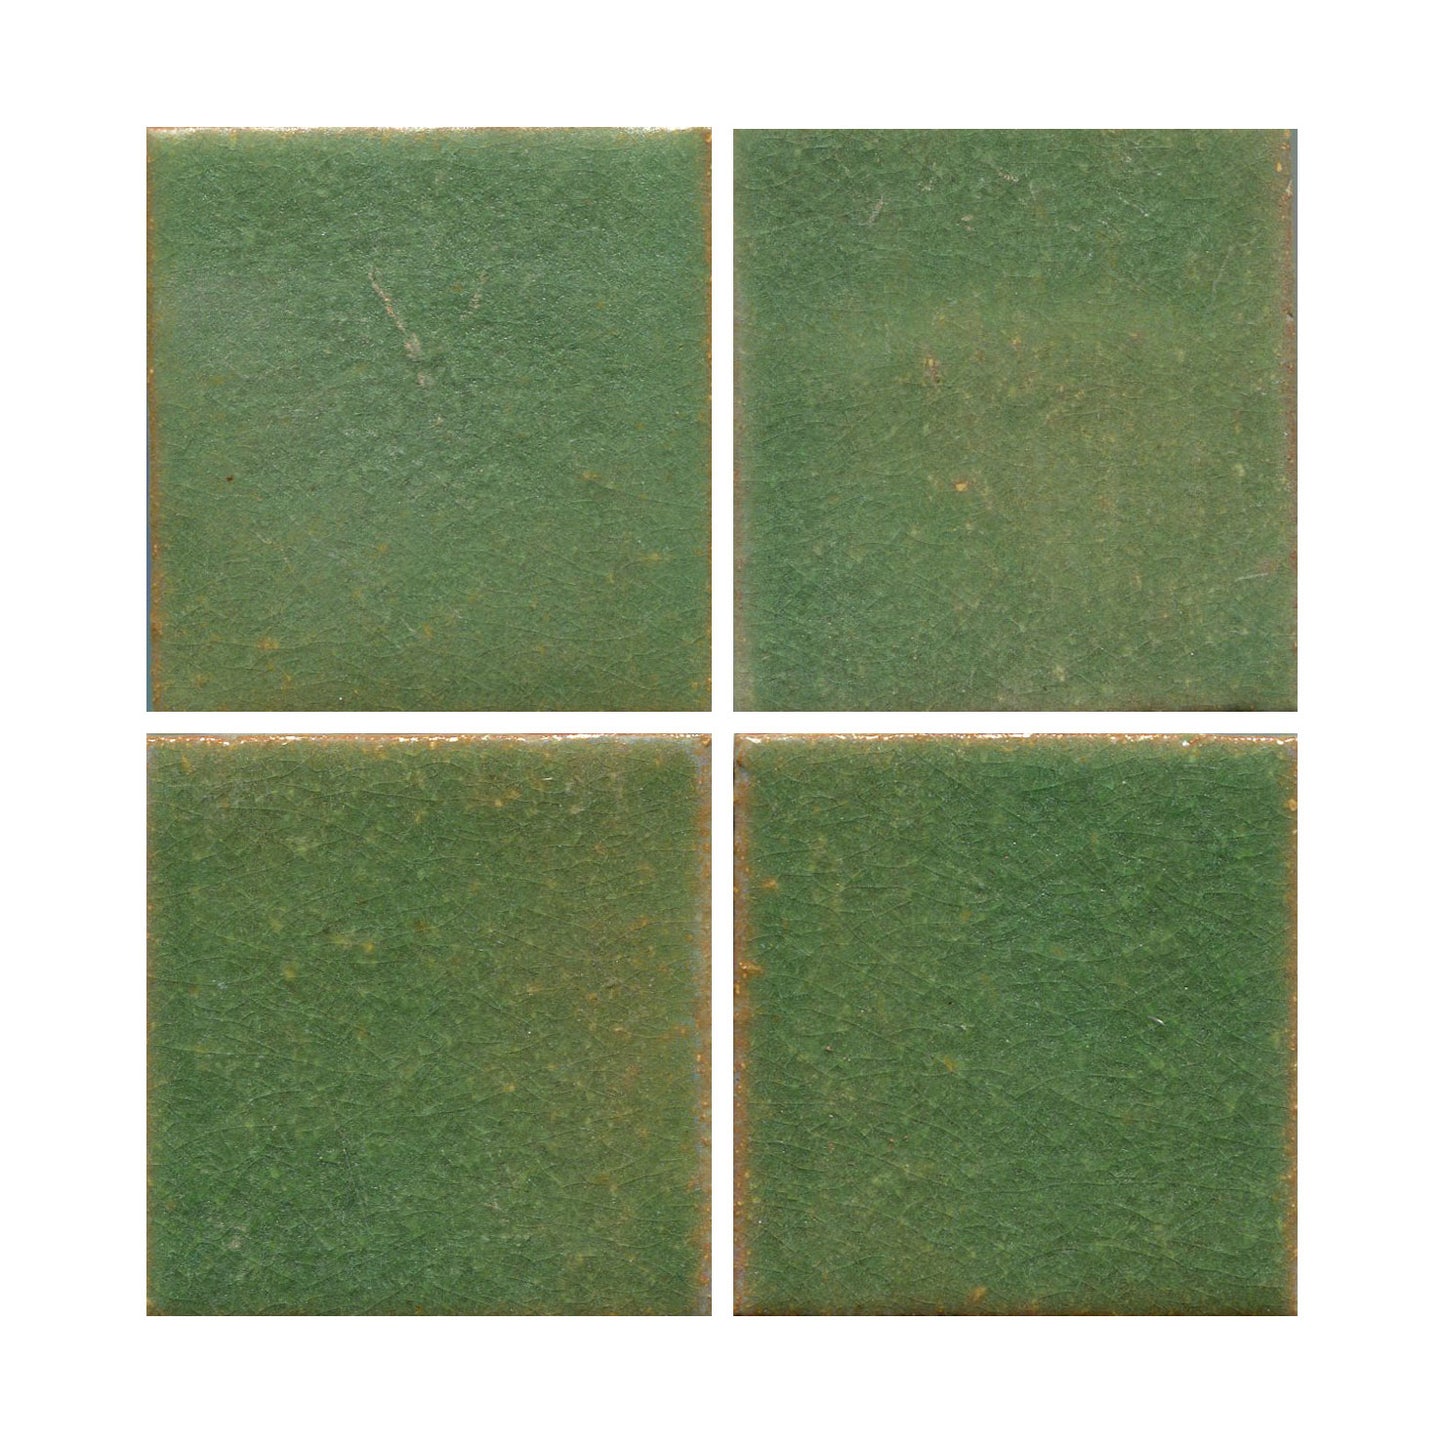 Avocado green 4x4 field tile